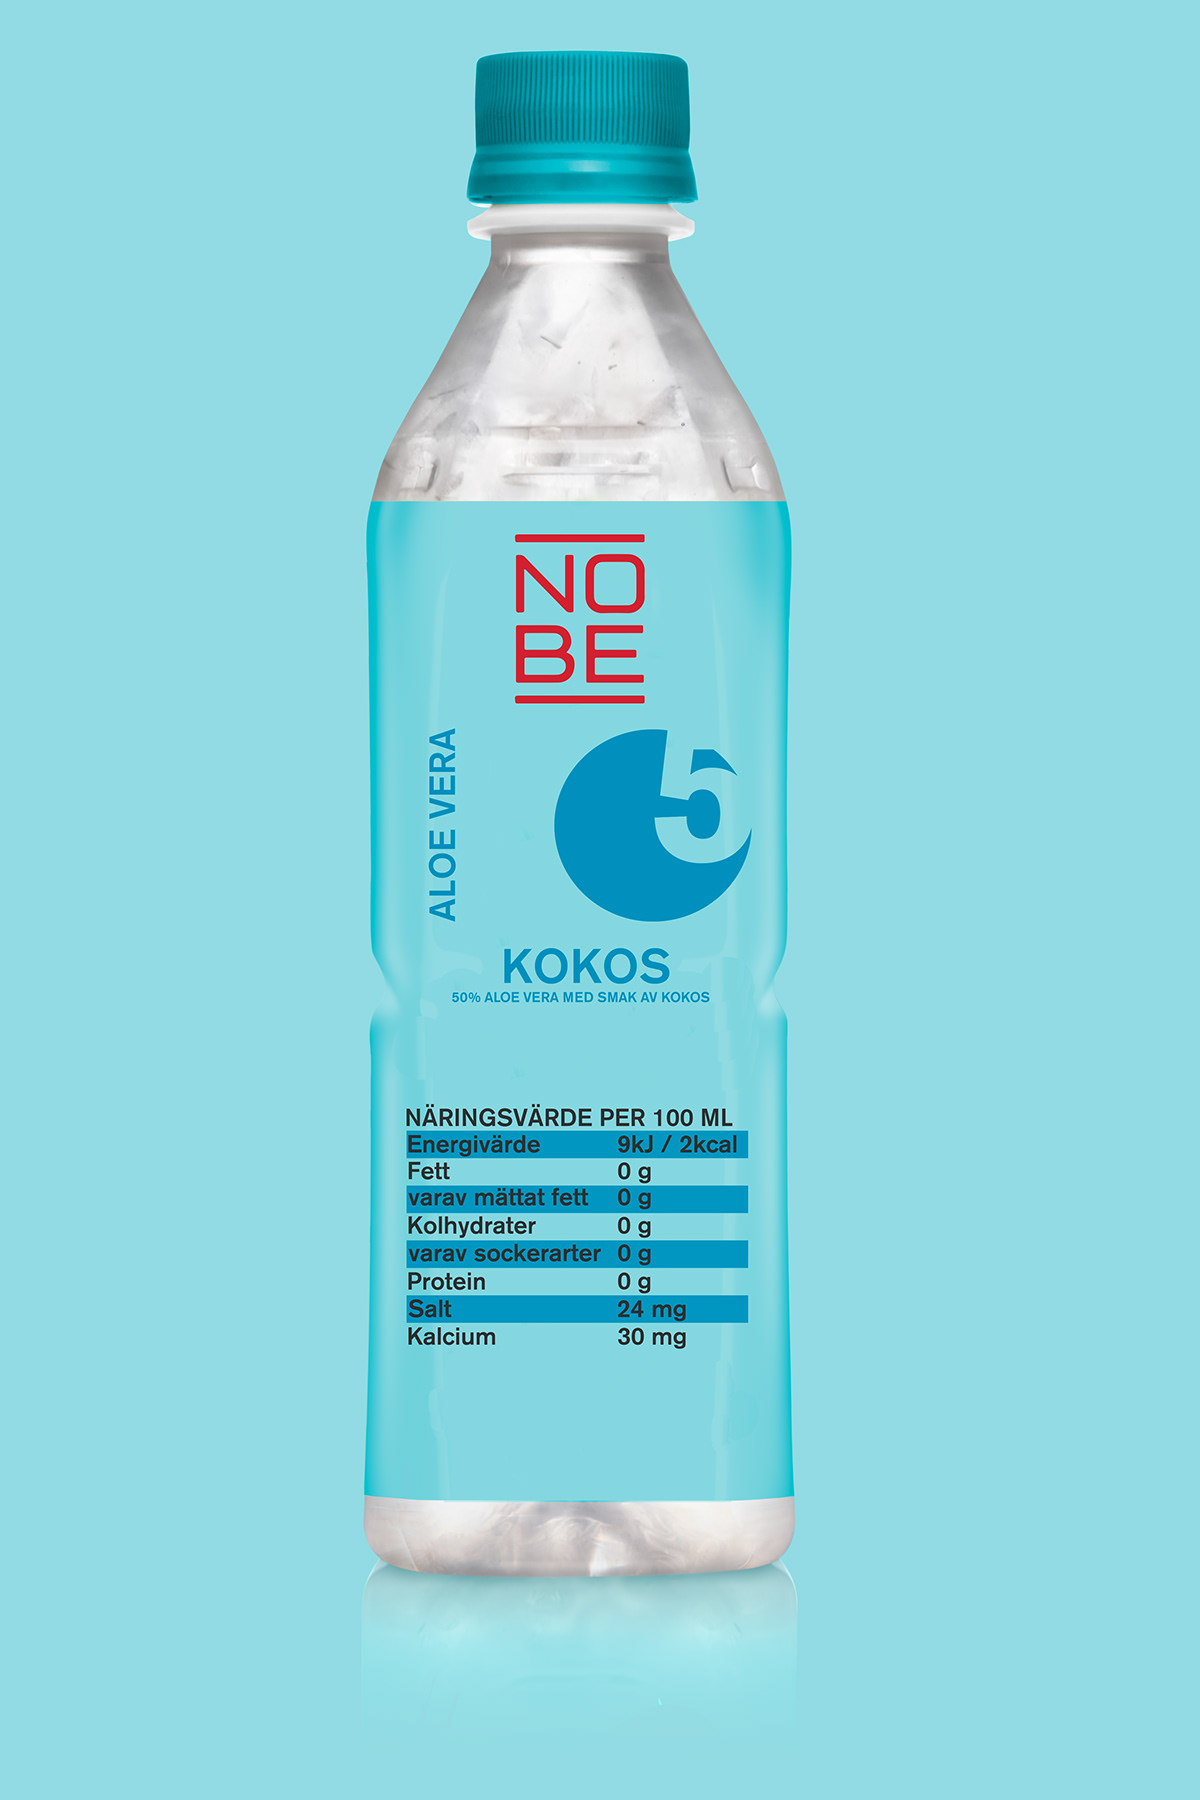 NOBE Aloe Vera water beverage drink bottle